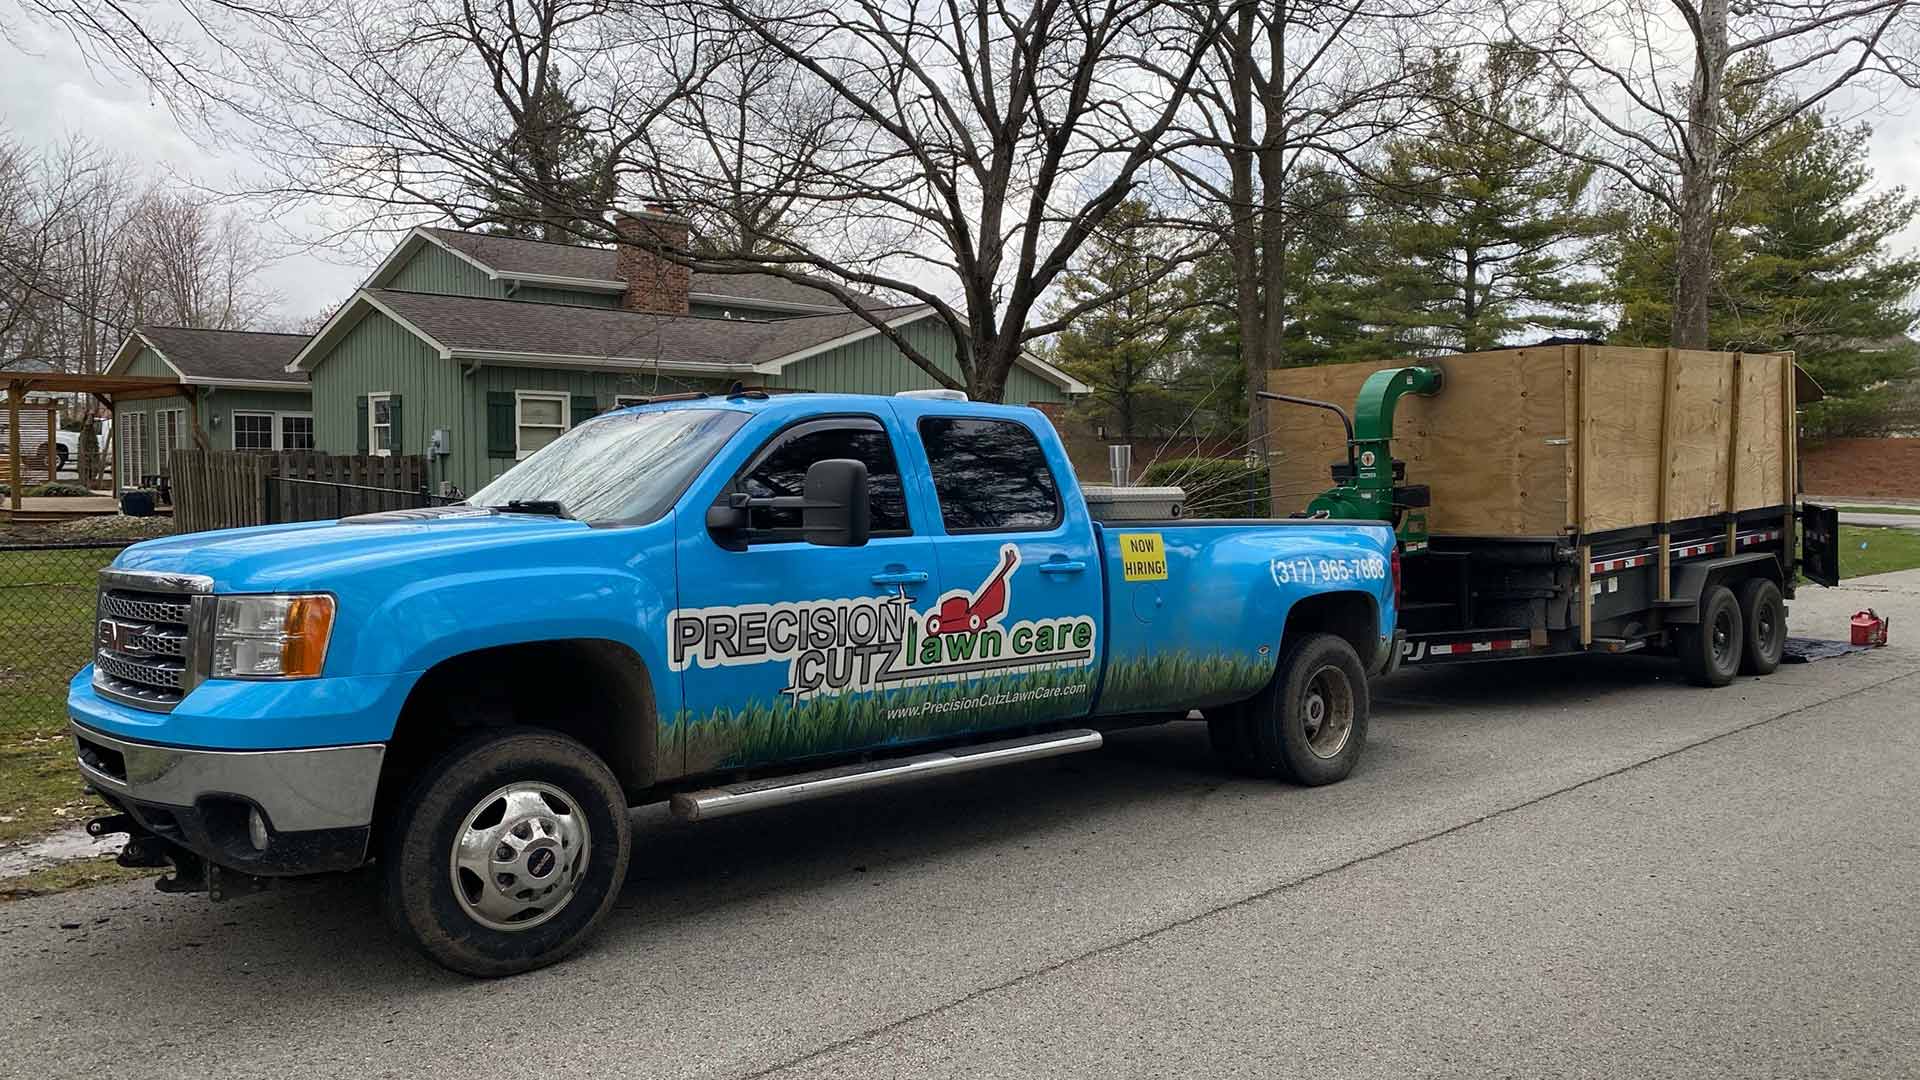 Precision Cutz Lawn Care servicing a property in Carmel, Indiana.